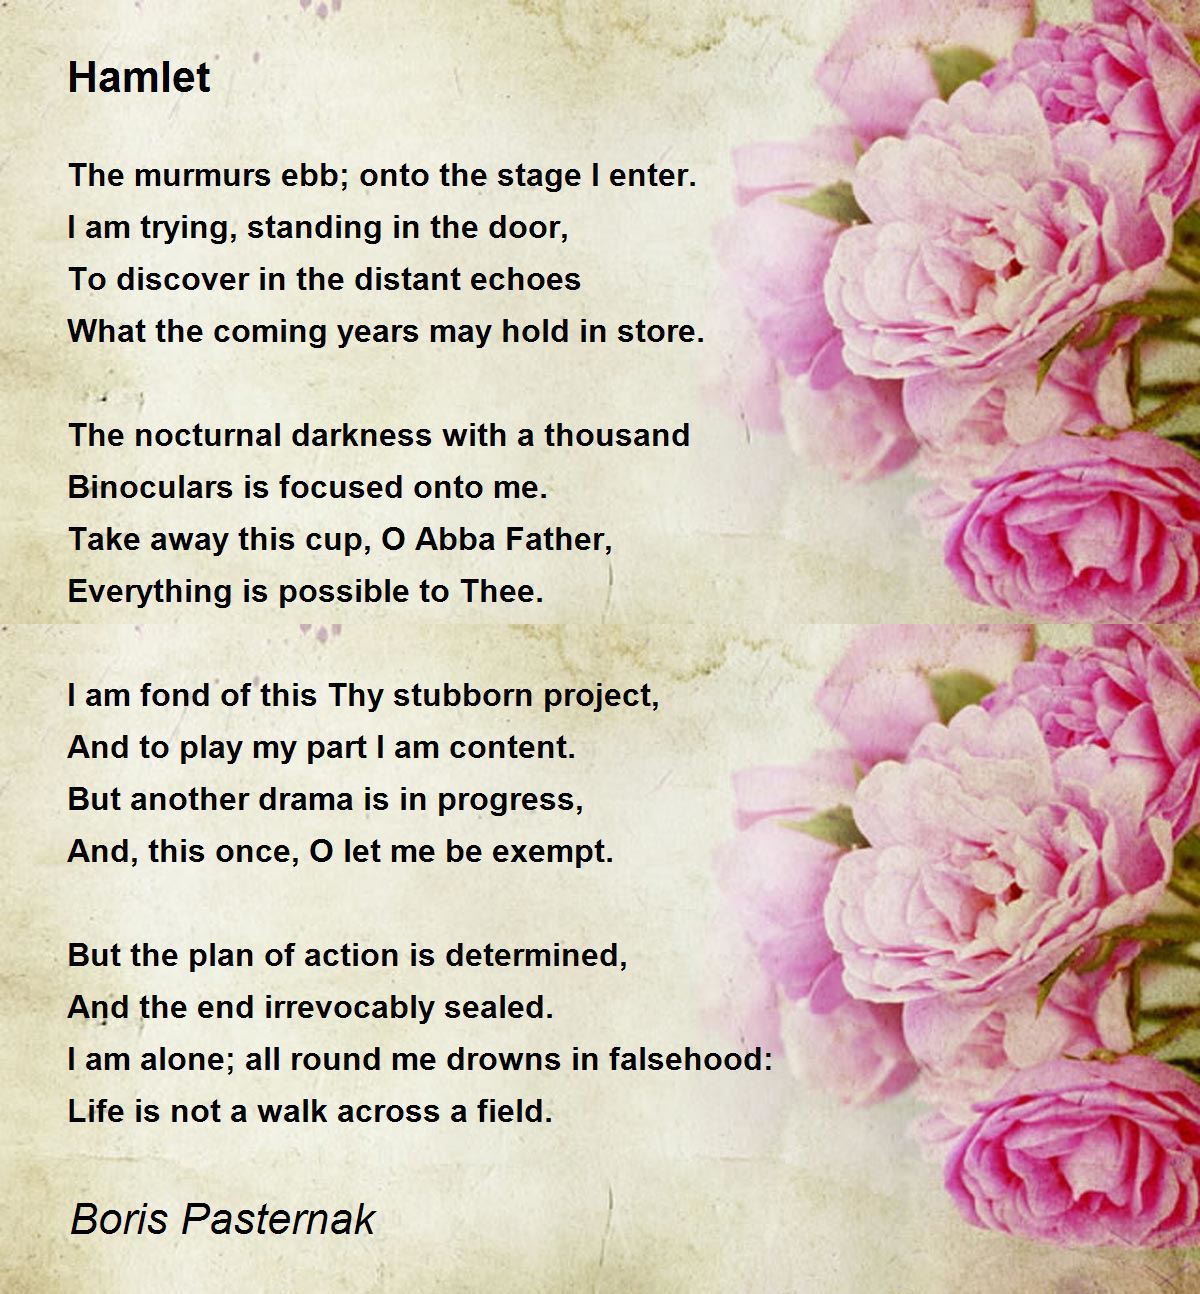 Hamlet Poem by Boris Pasternak - Poem Hunter